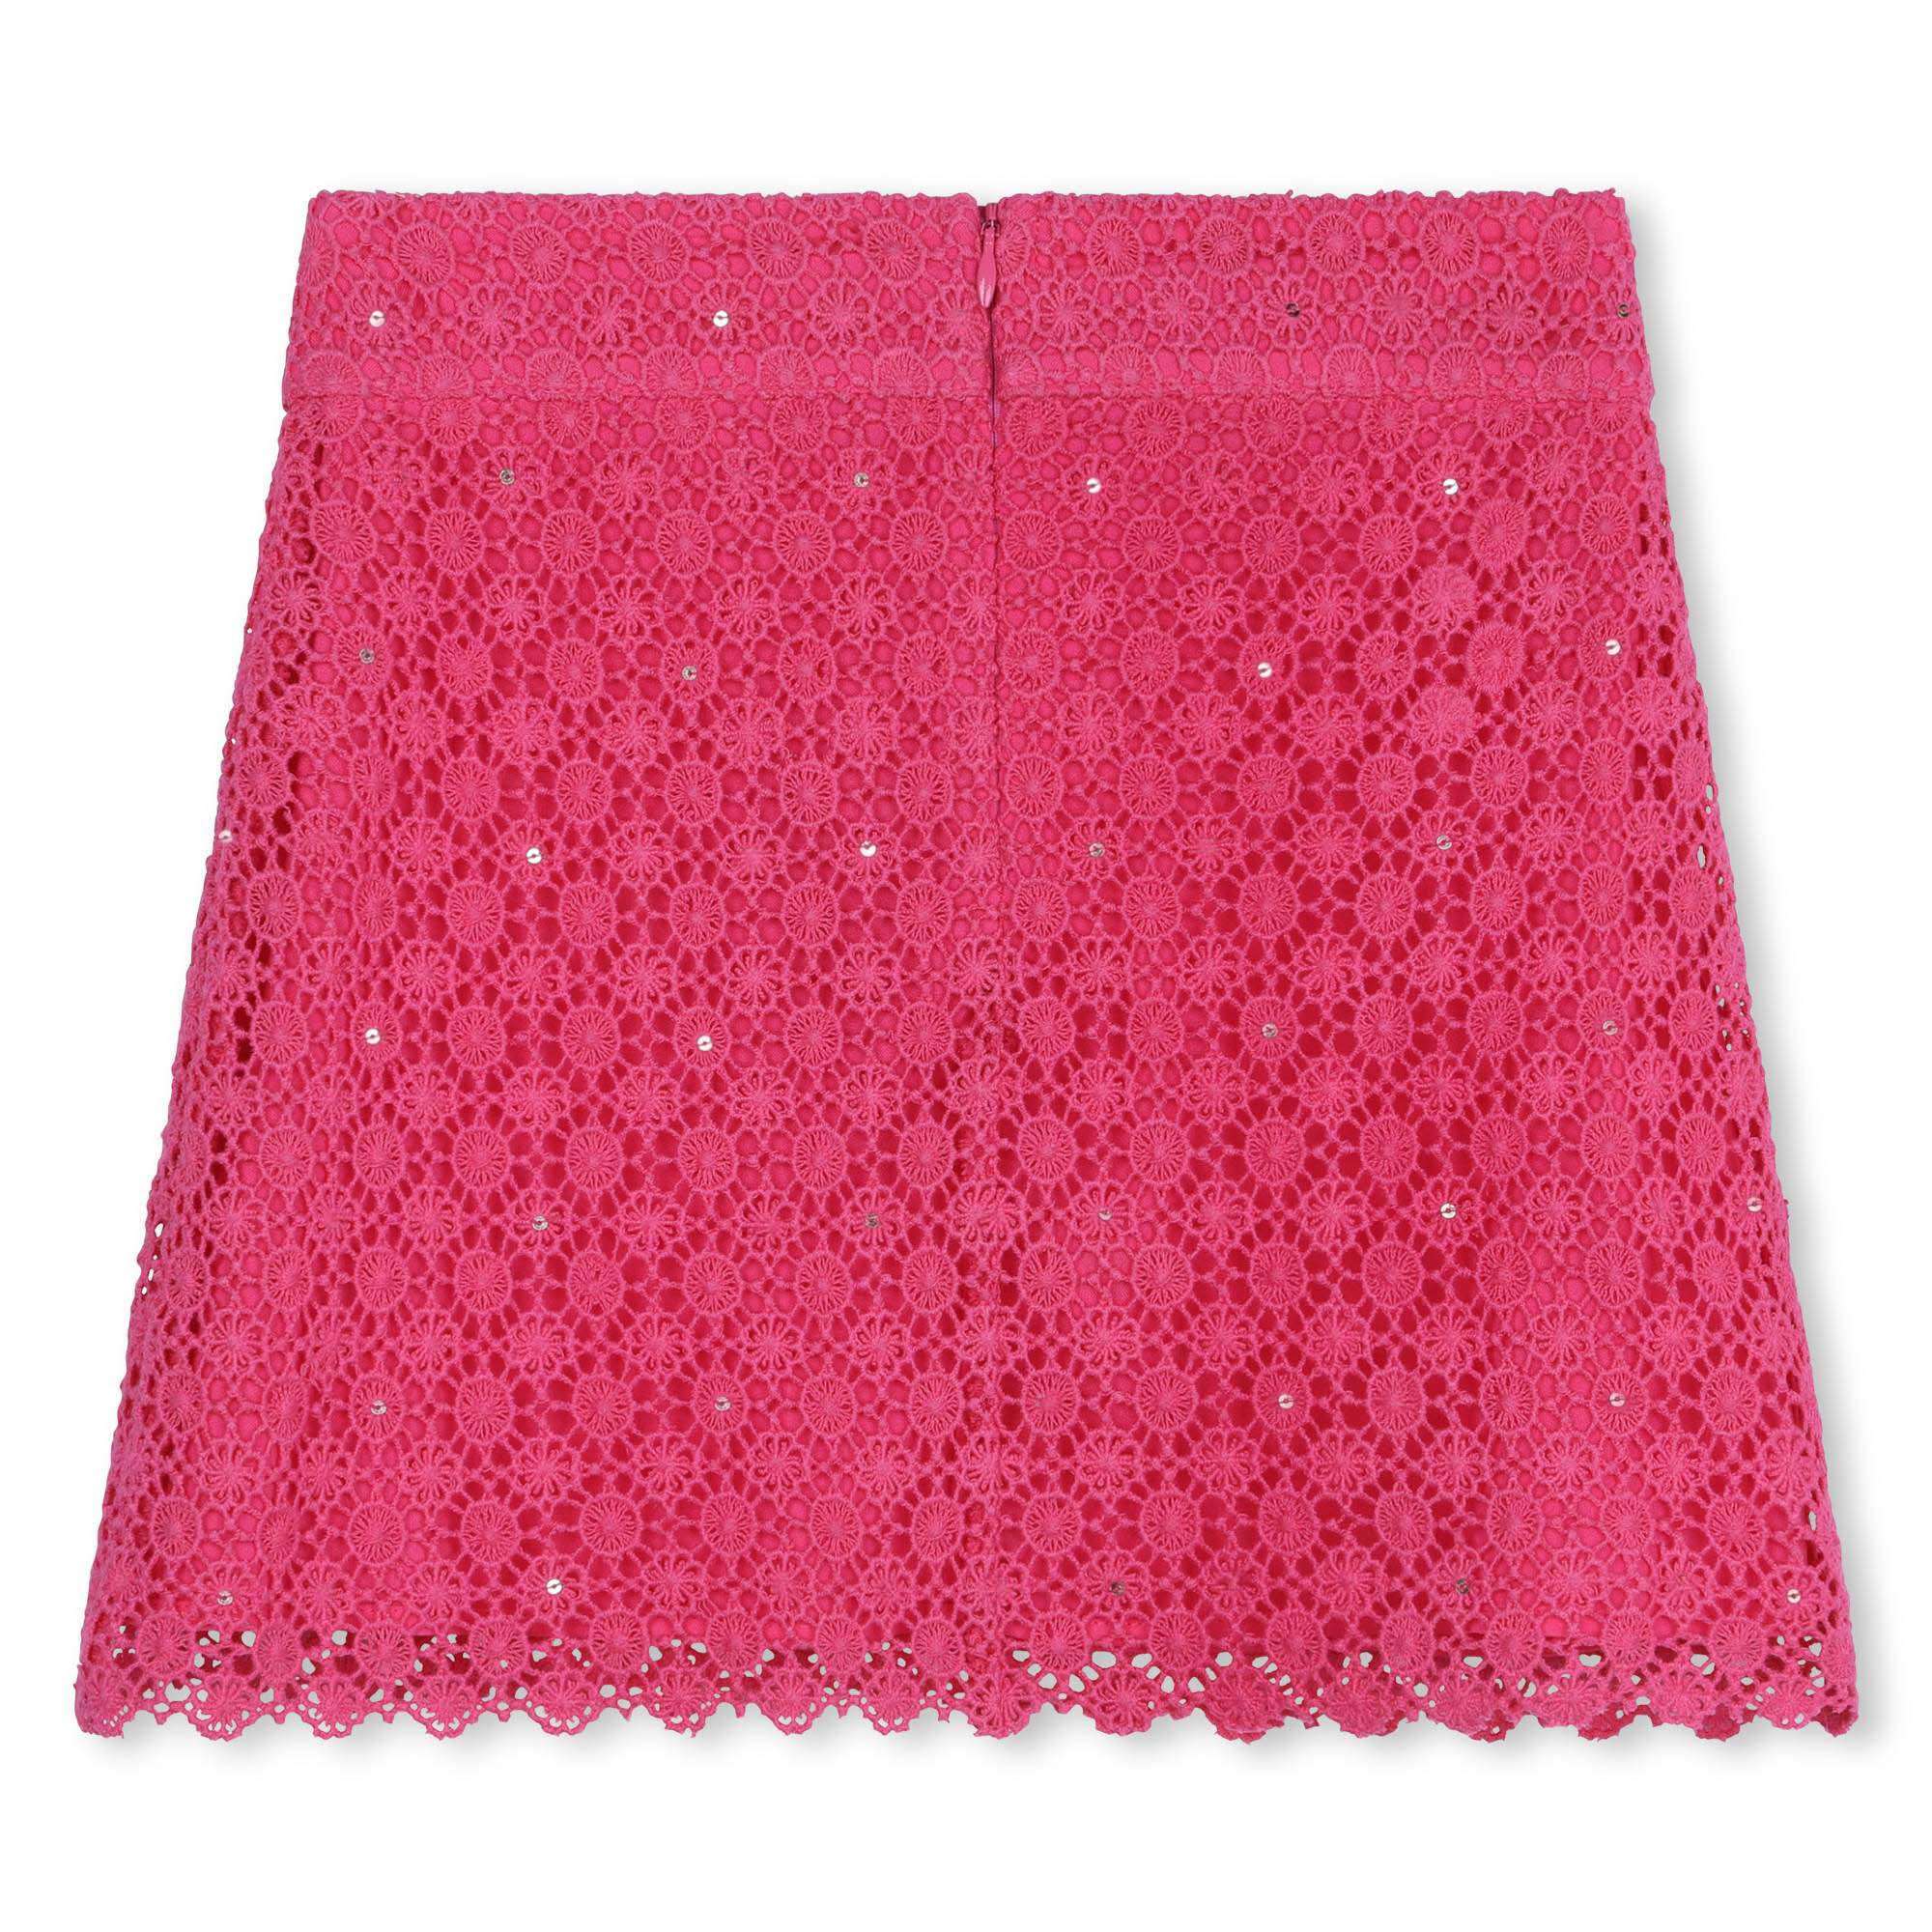 Lace sequined skirt MICHAEL KORS for GIRL